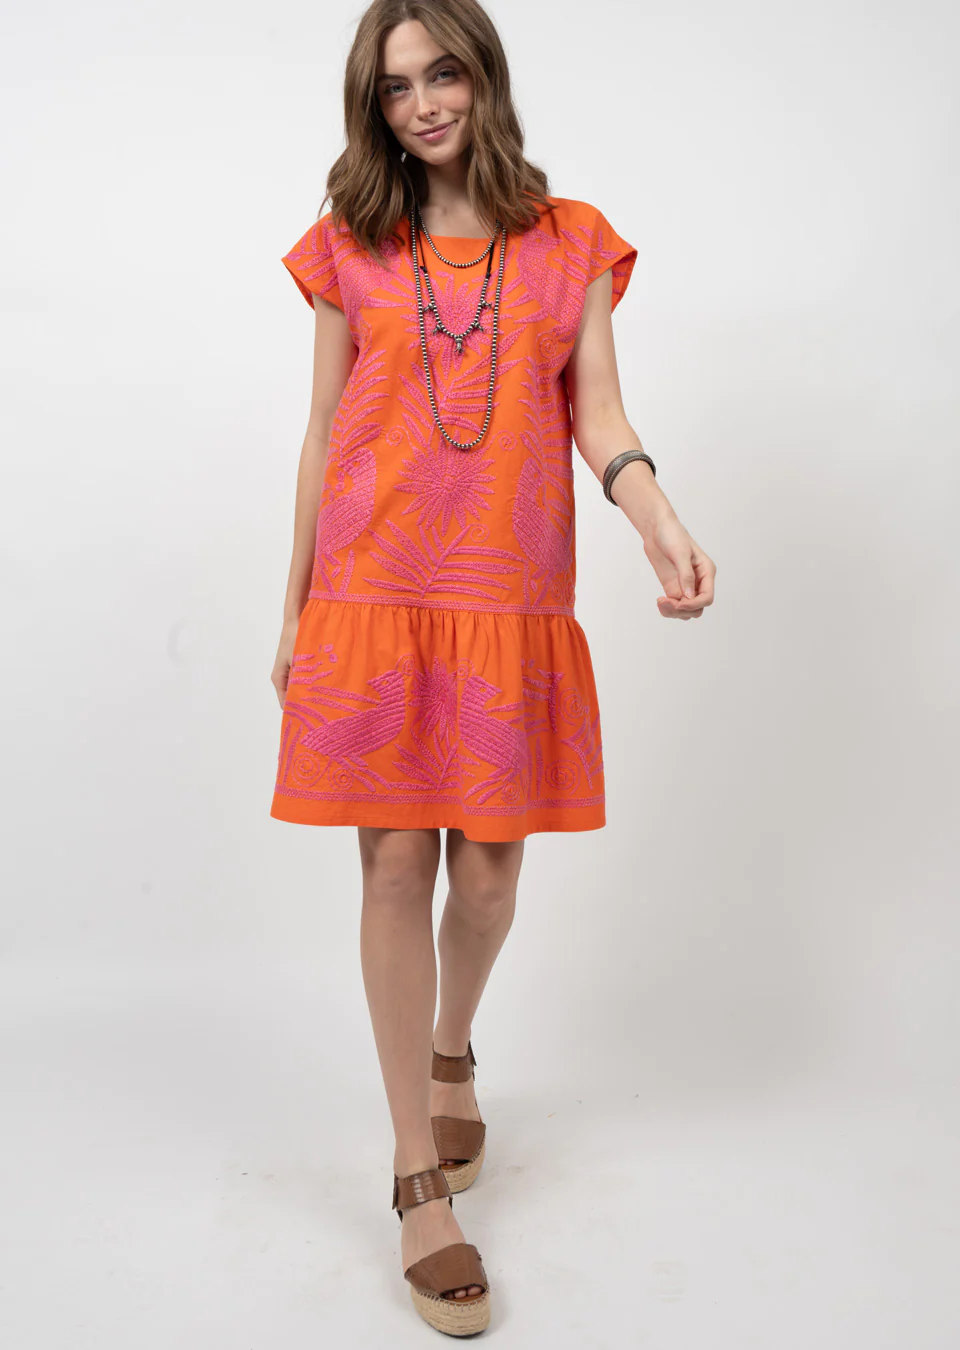 Gaby Dress in Tangerine